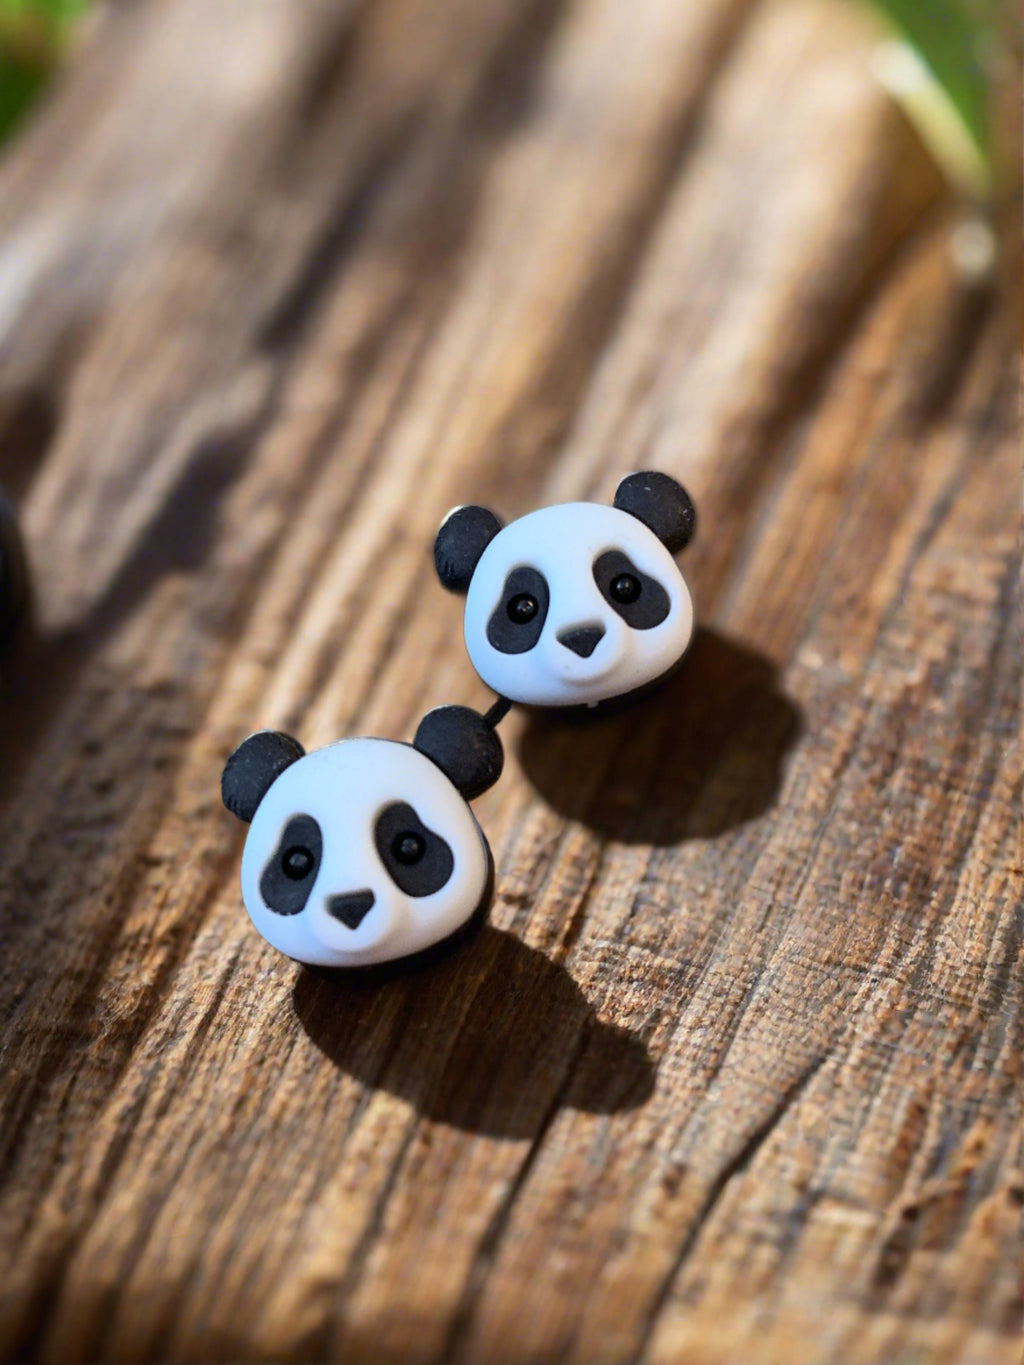 Unique and Adorable Panda Earrings